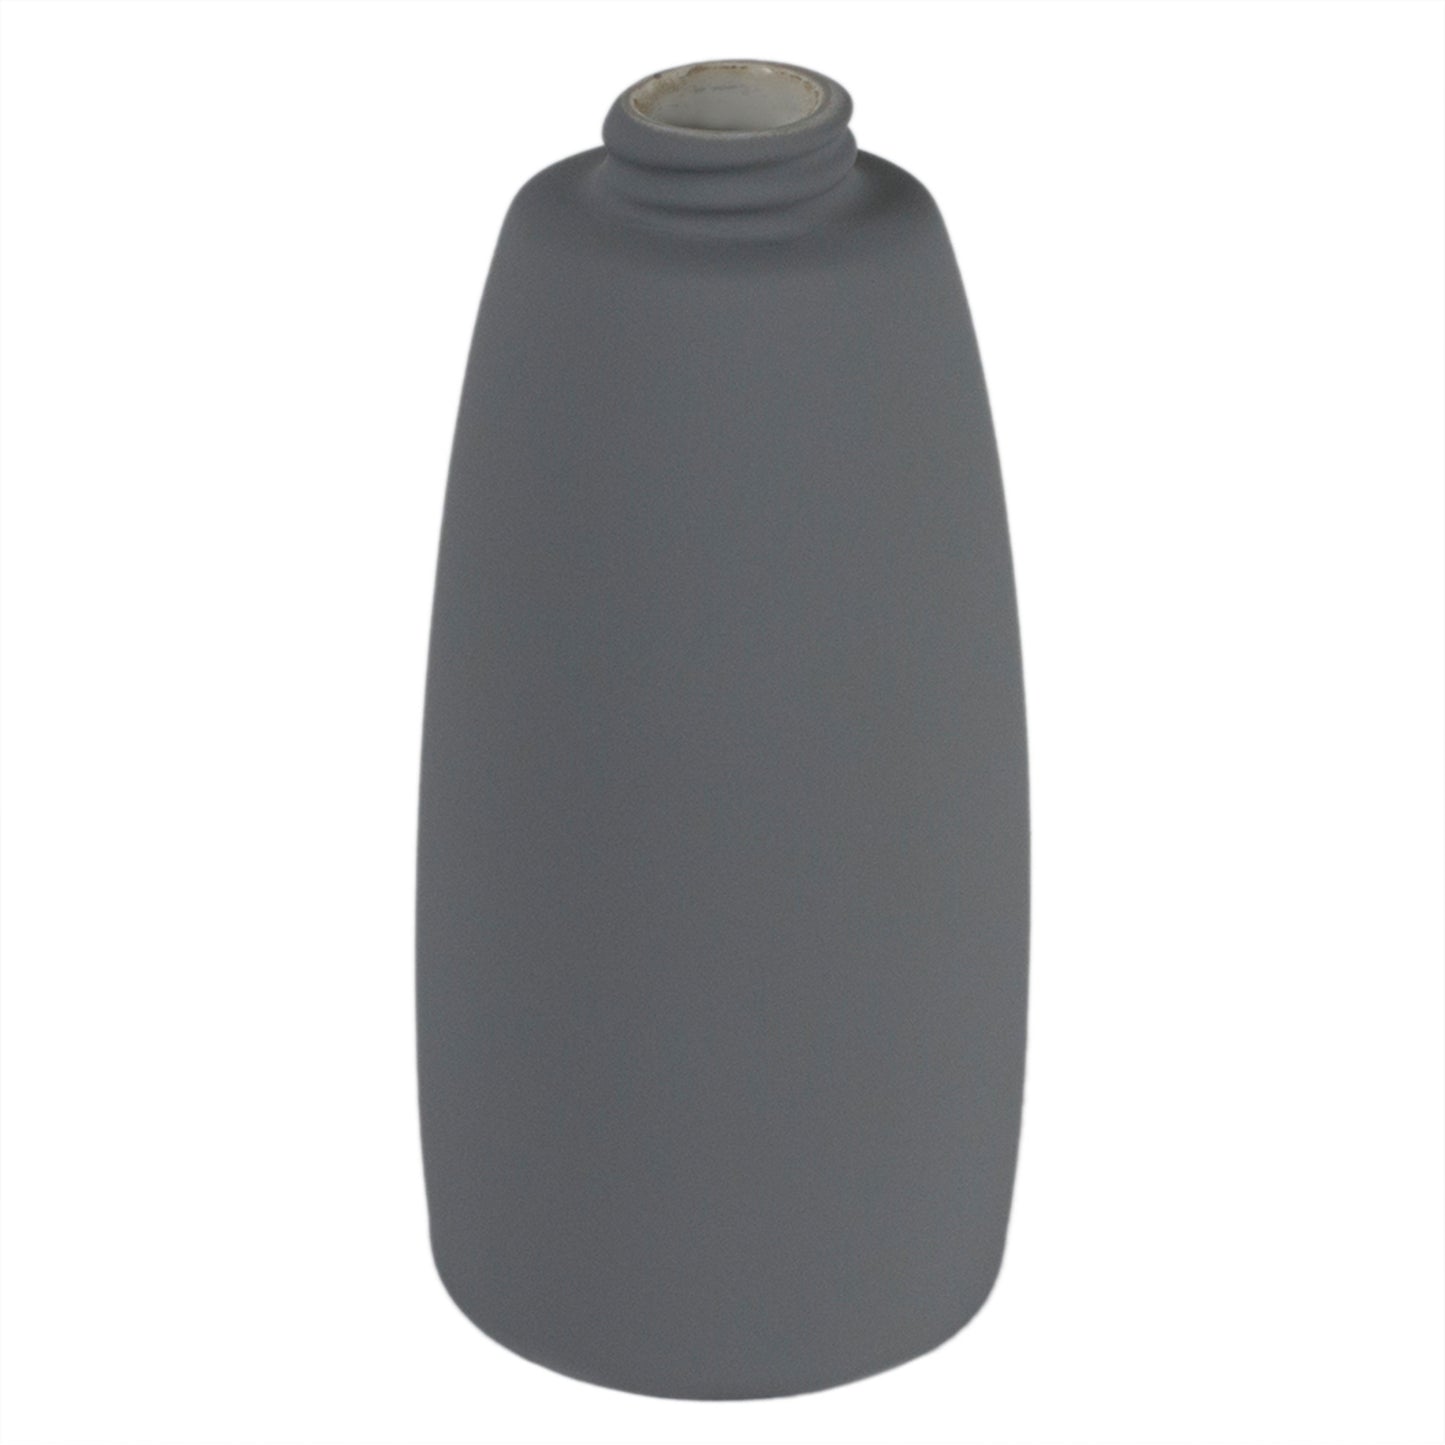 Home Basics Rubberized Ceramic Cylinder Soap Dispenser, Grey - Grey